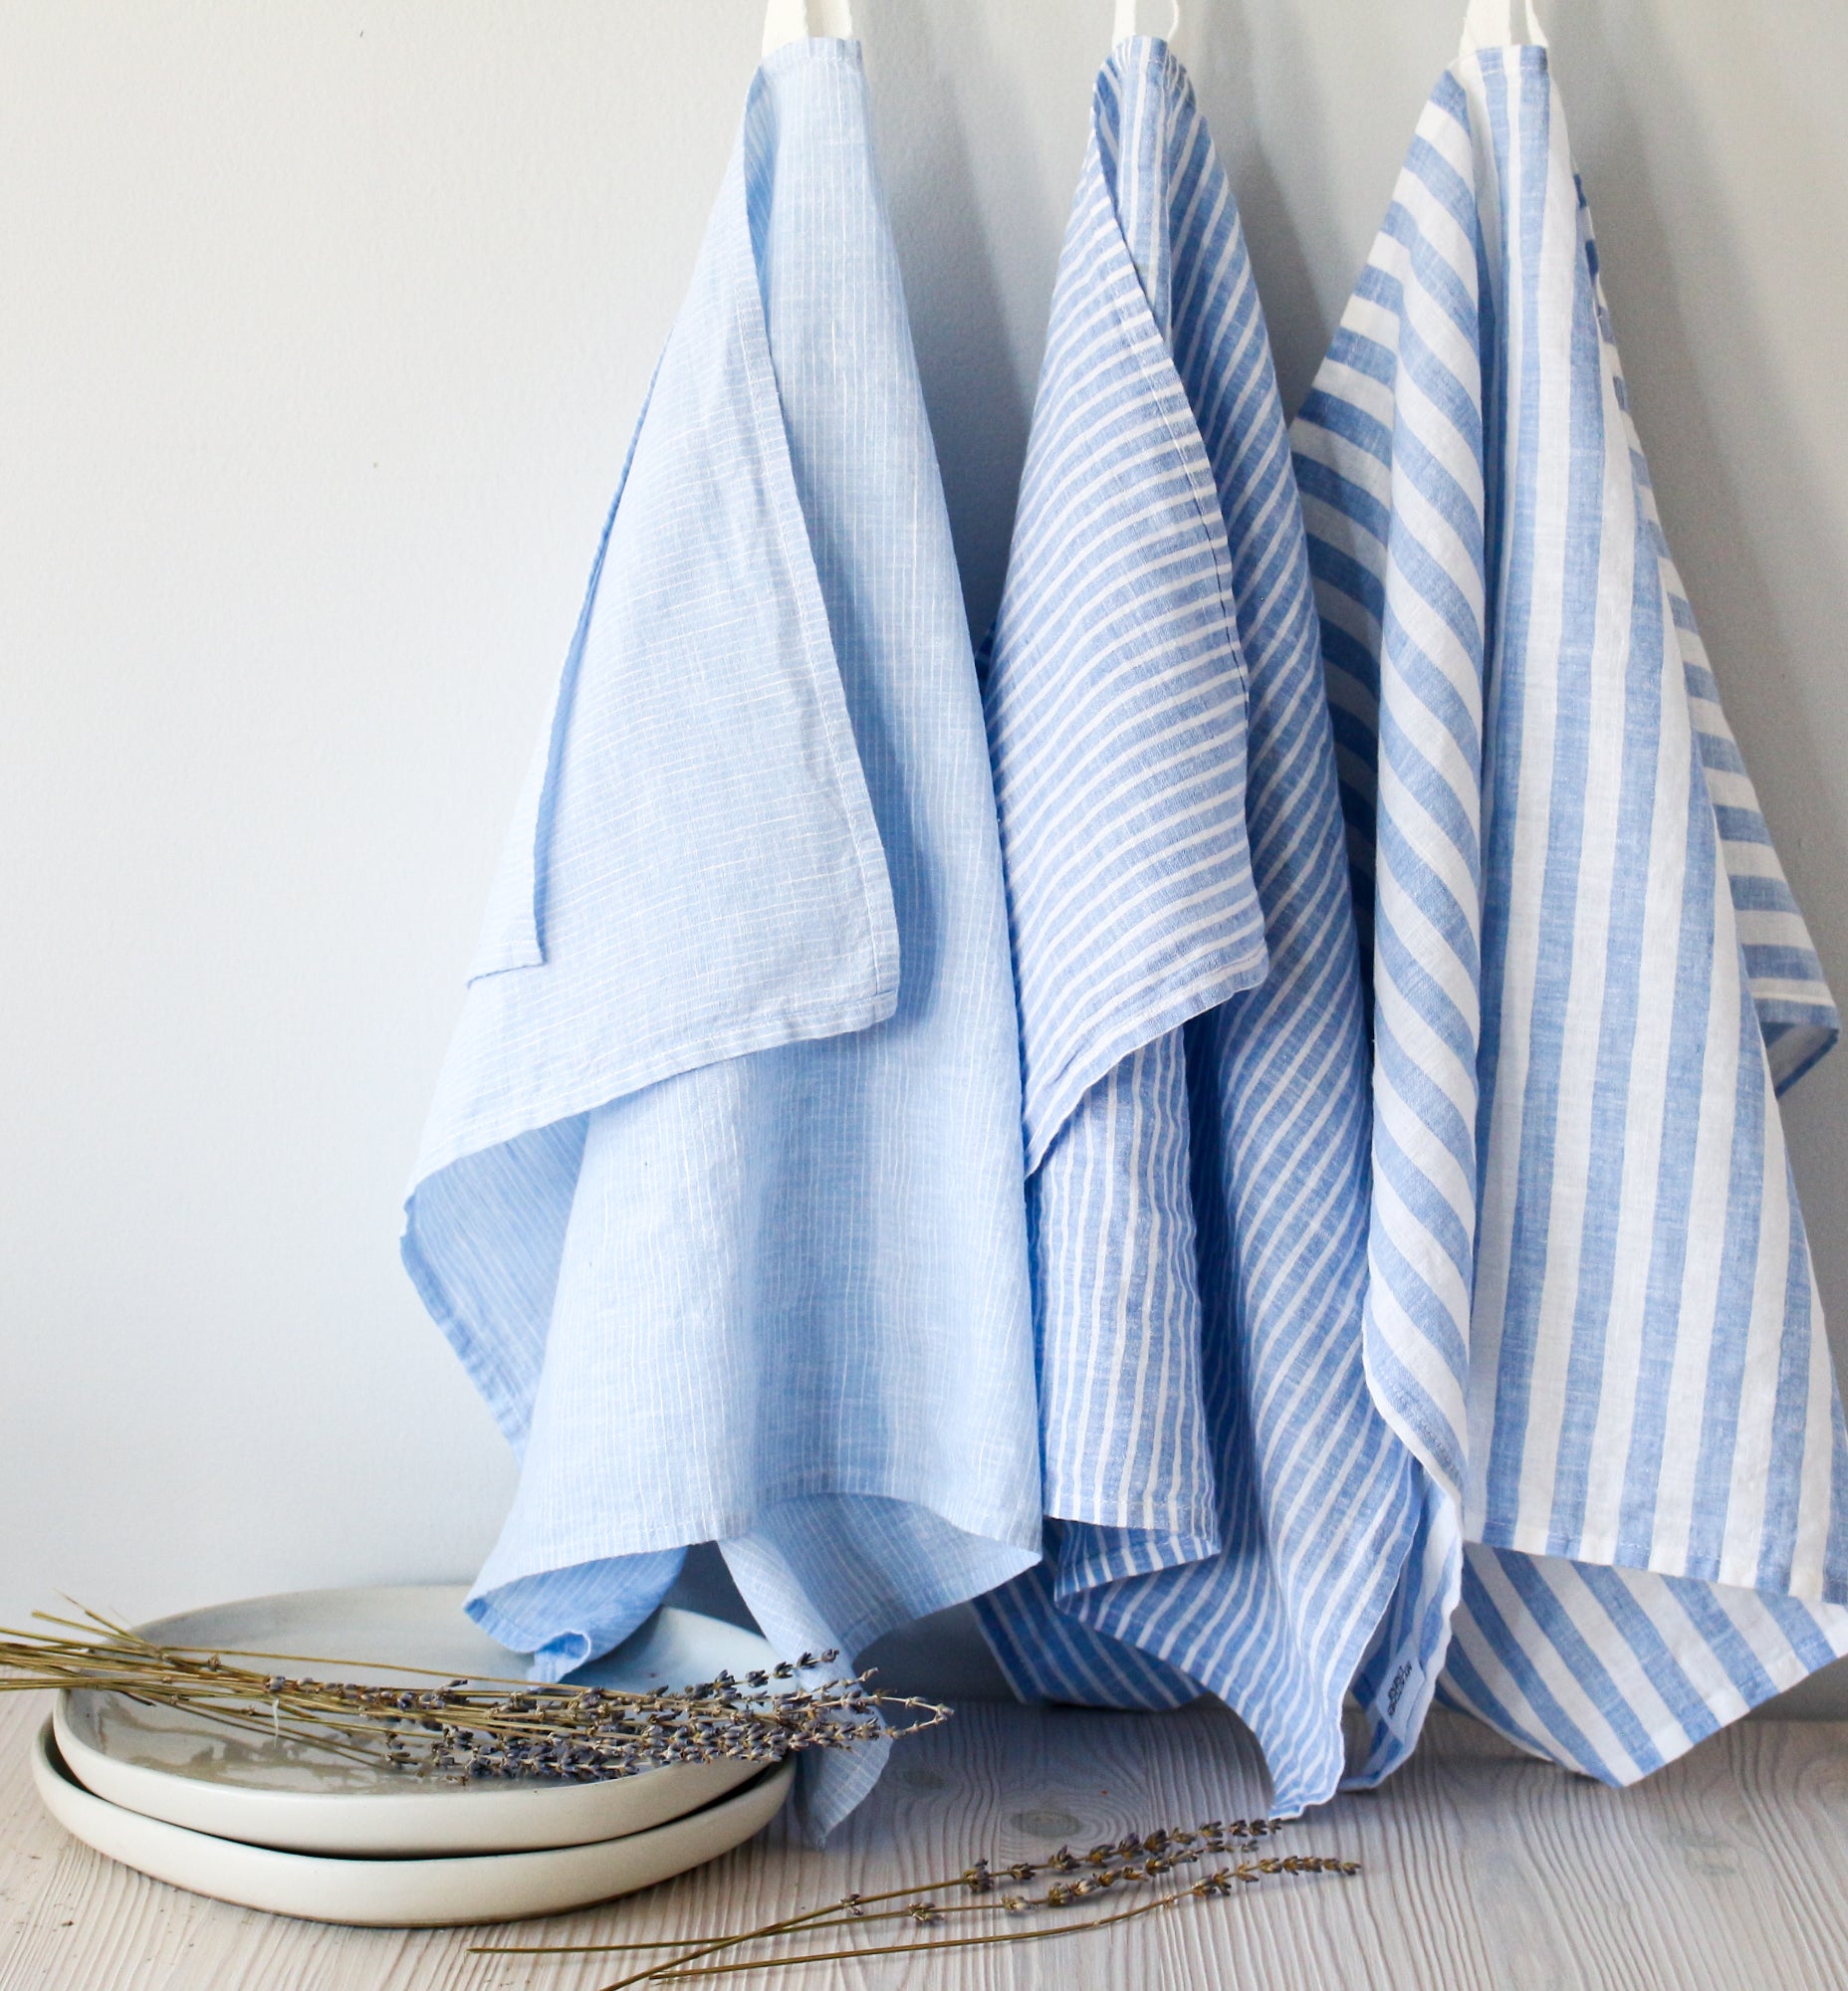 Set of 6 Striped Linen Tea Towels, Flax Dish Towel,blue and Grey Linen Kitchen  Towel,natural Handmade Linen Towels,rustic Linen Hand Towels 